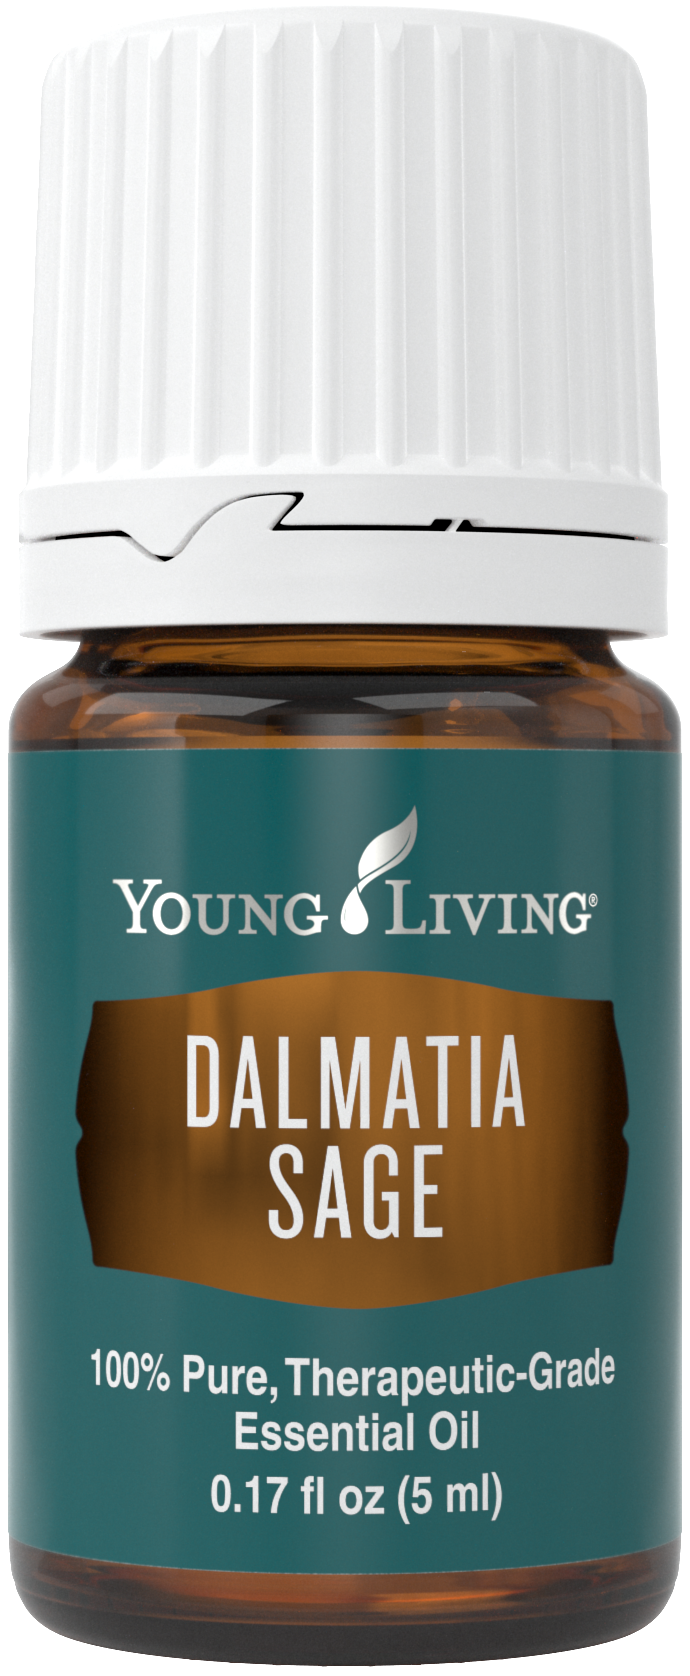 Dalmatia Sage 5ml Silo.png